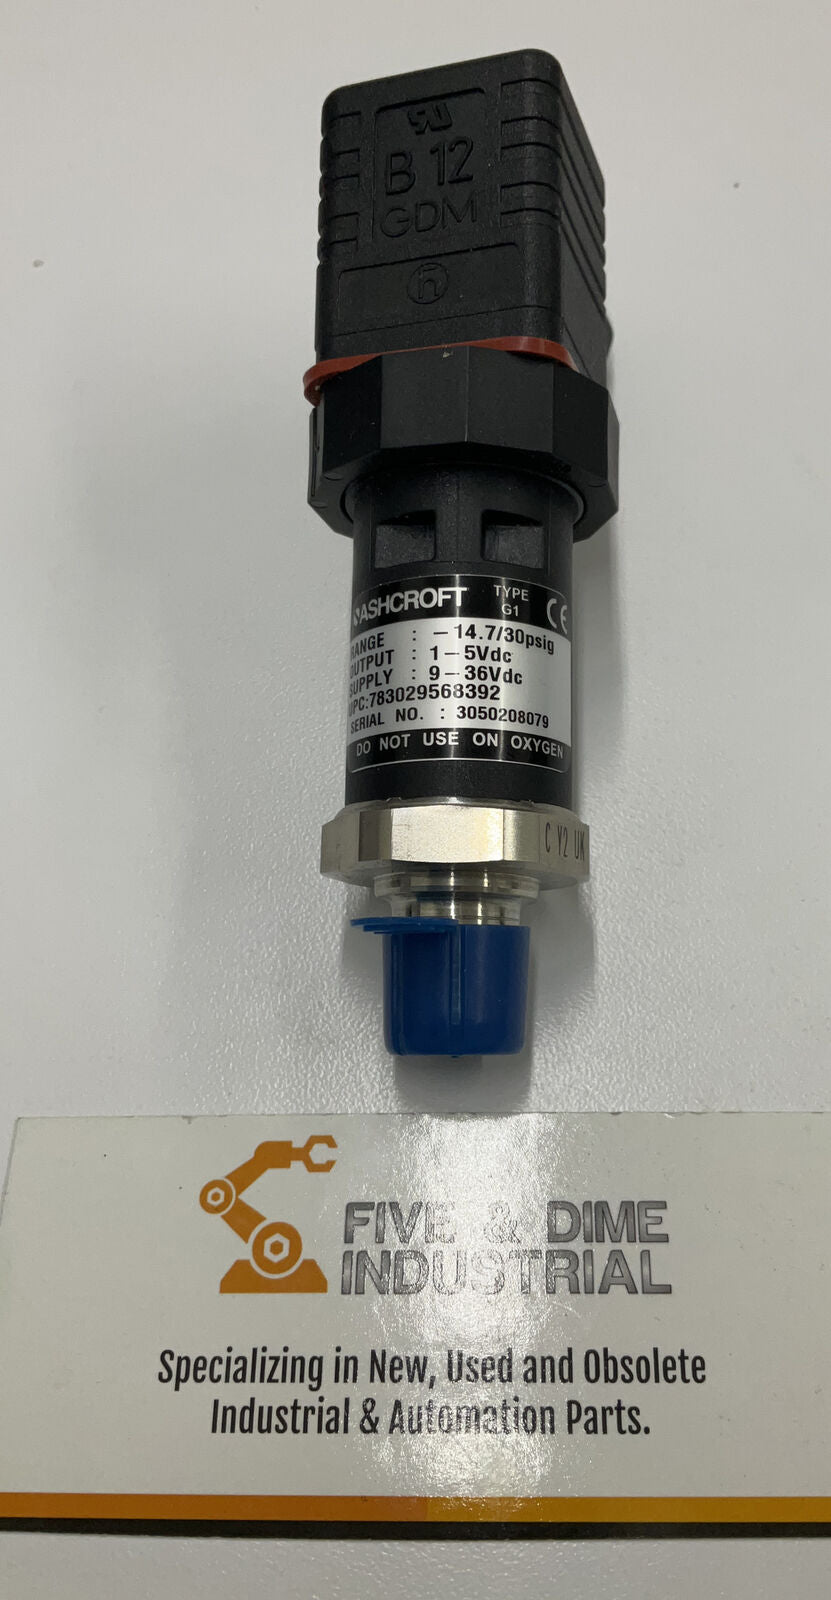 Ashcroft CY2UK New Pressure Switch B 12 GDM 14.7/30psig (BL251) - 0